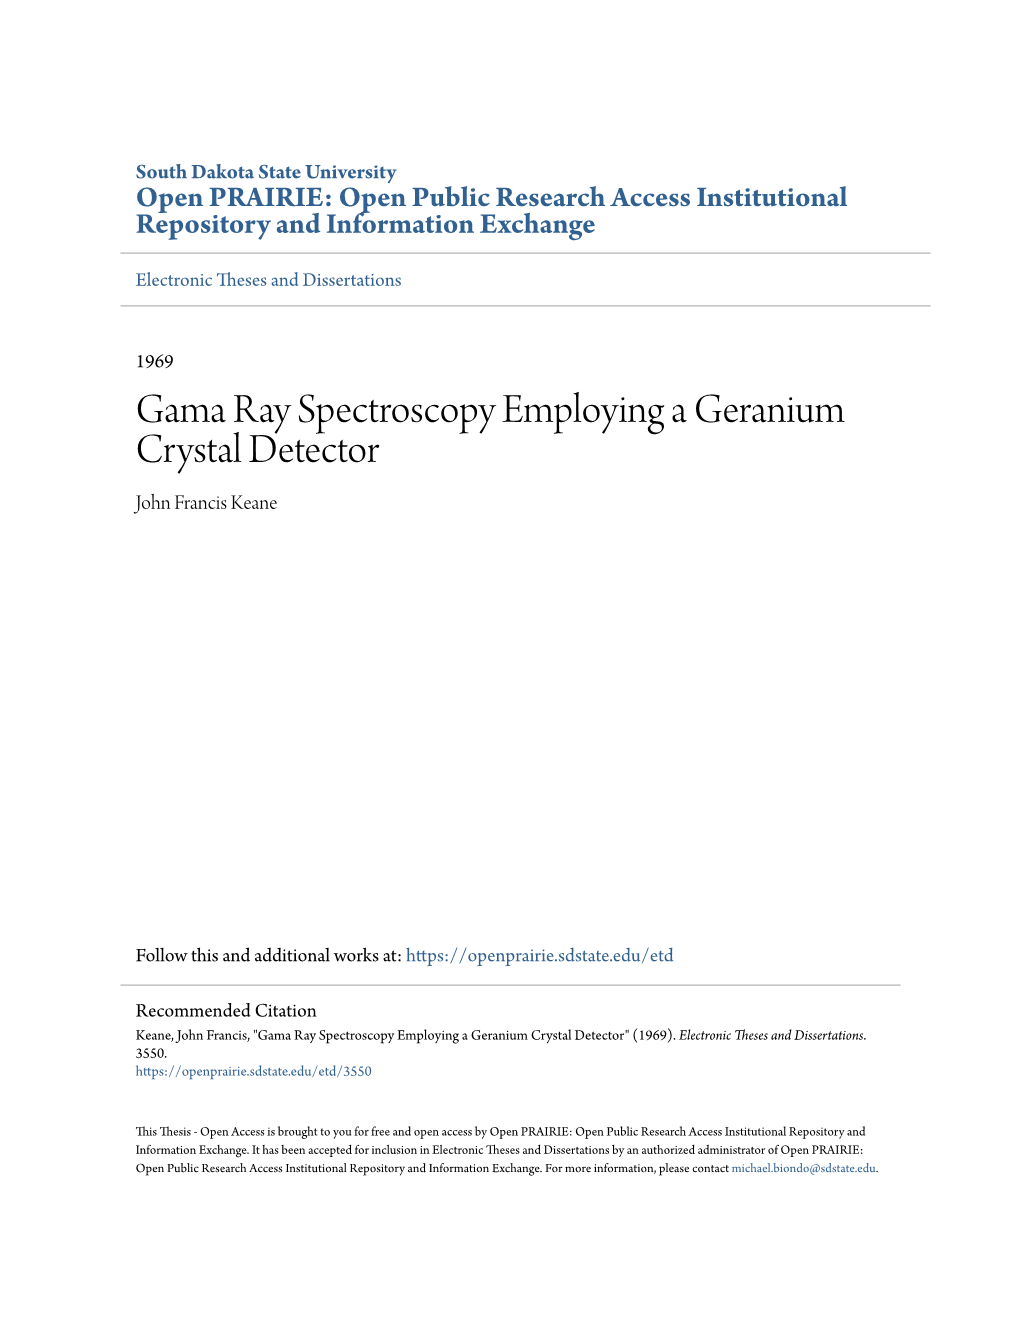 Gama Ray Spectroscopy Employing a Geranium Crystal Detector John Francis Keane